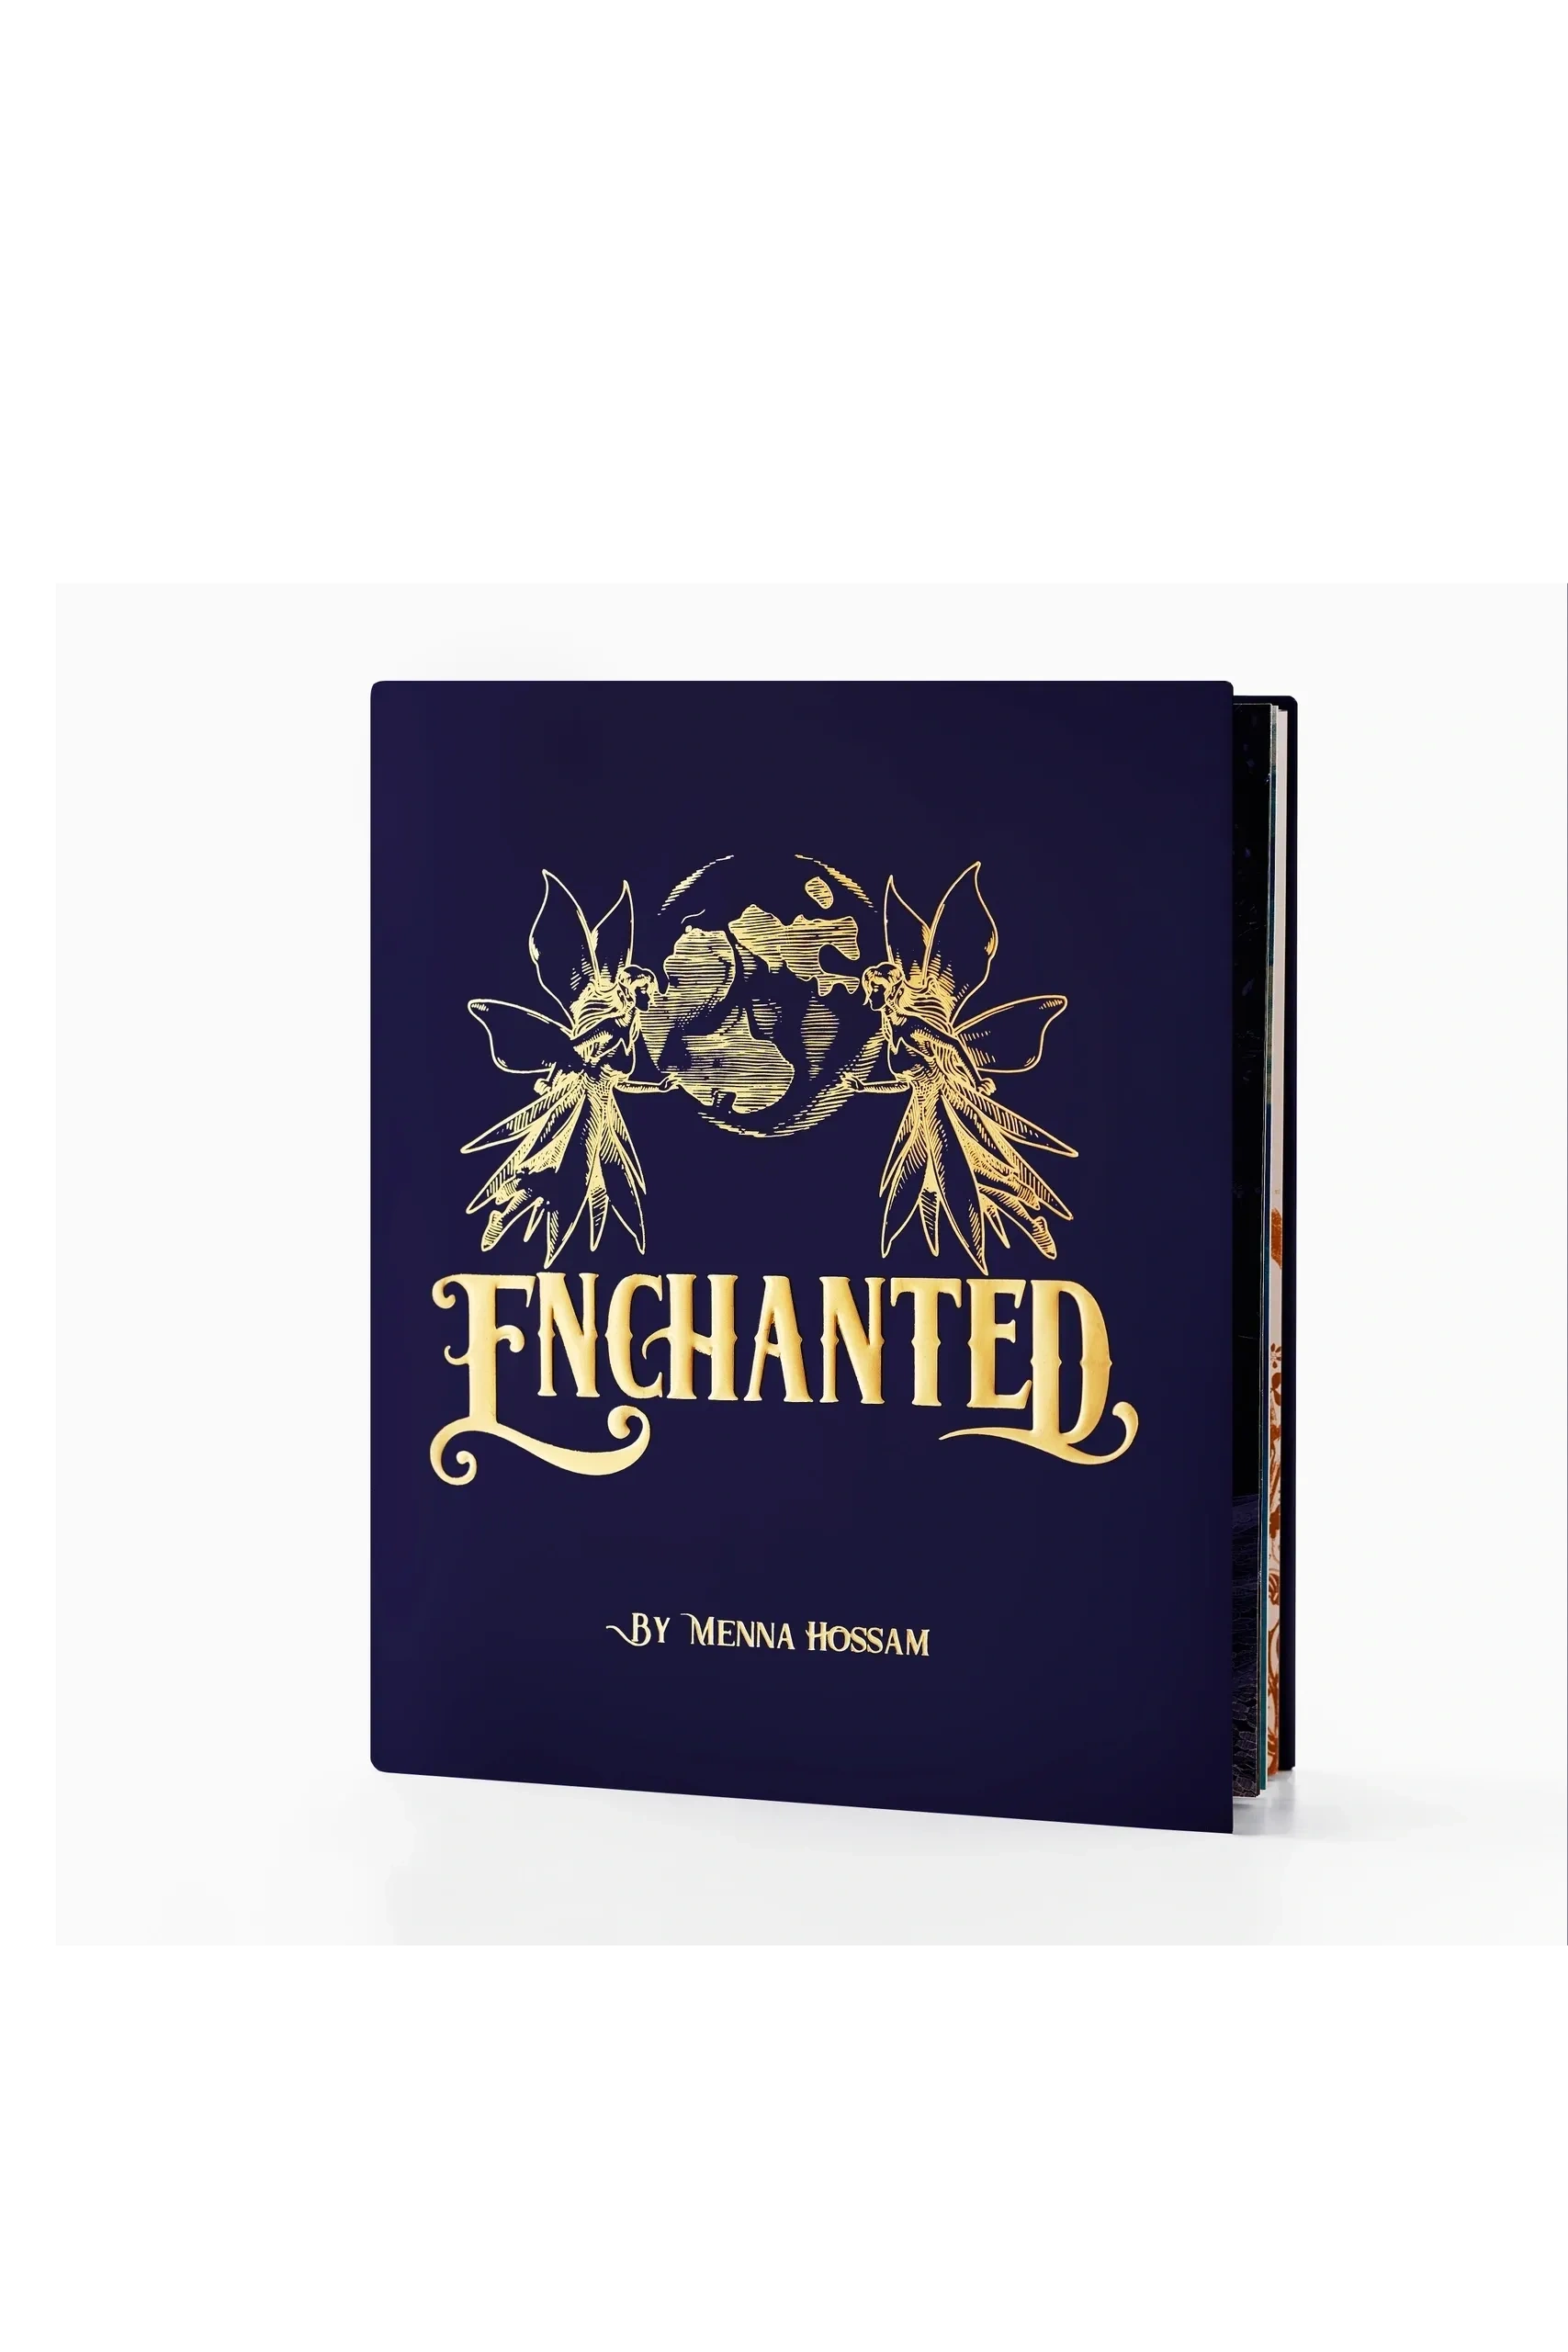 Enchanted book by Menna Hossam